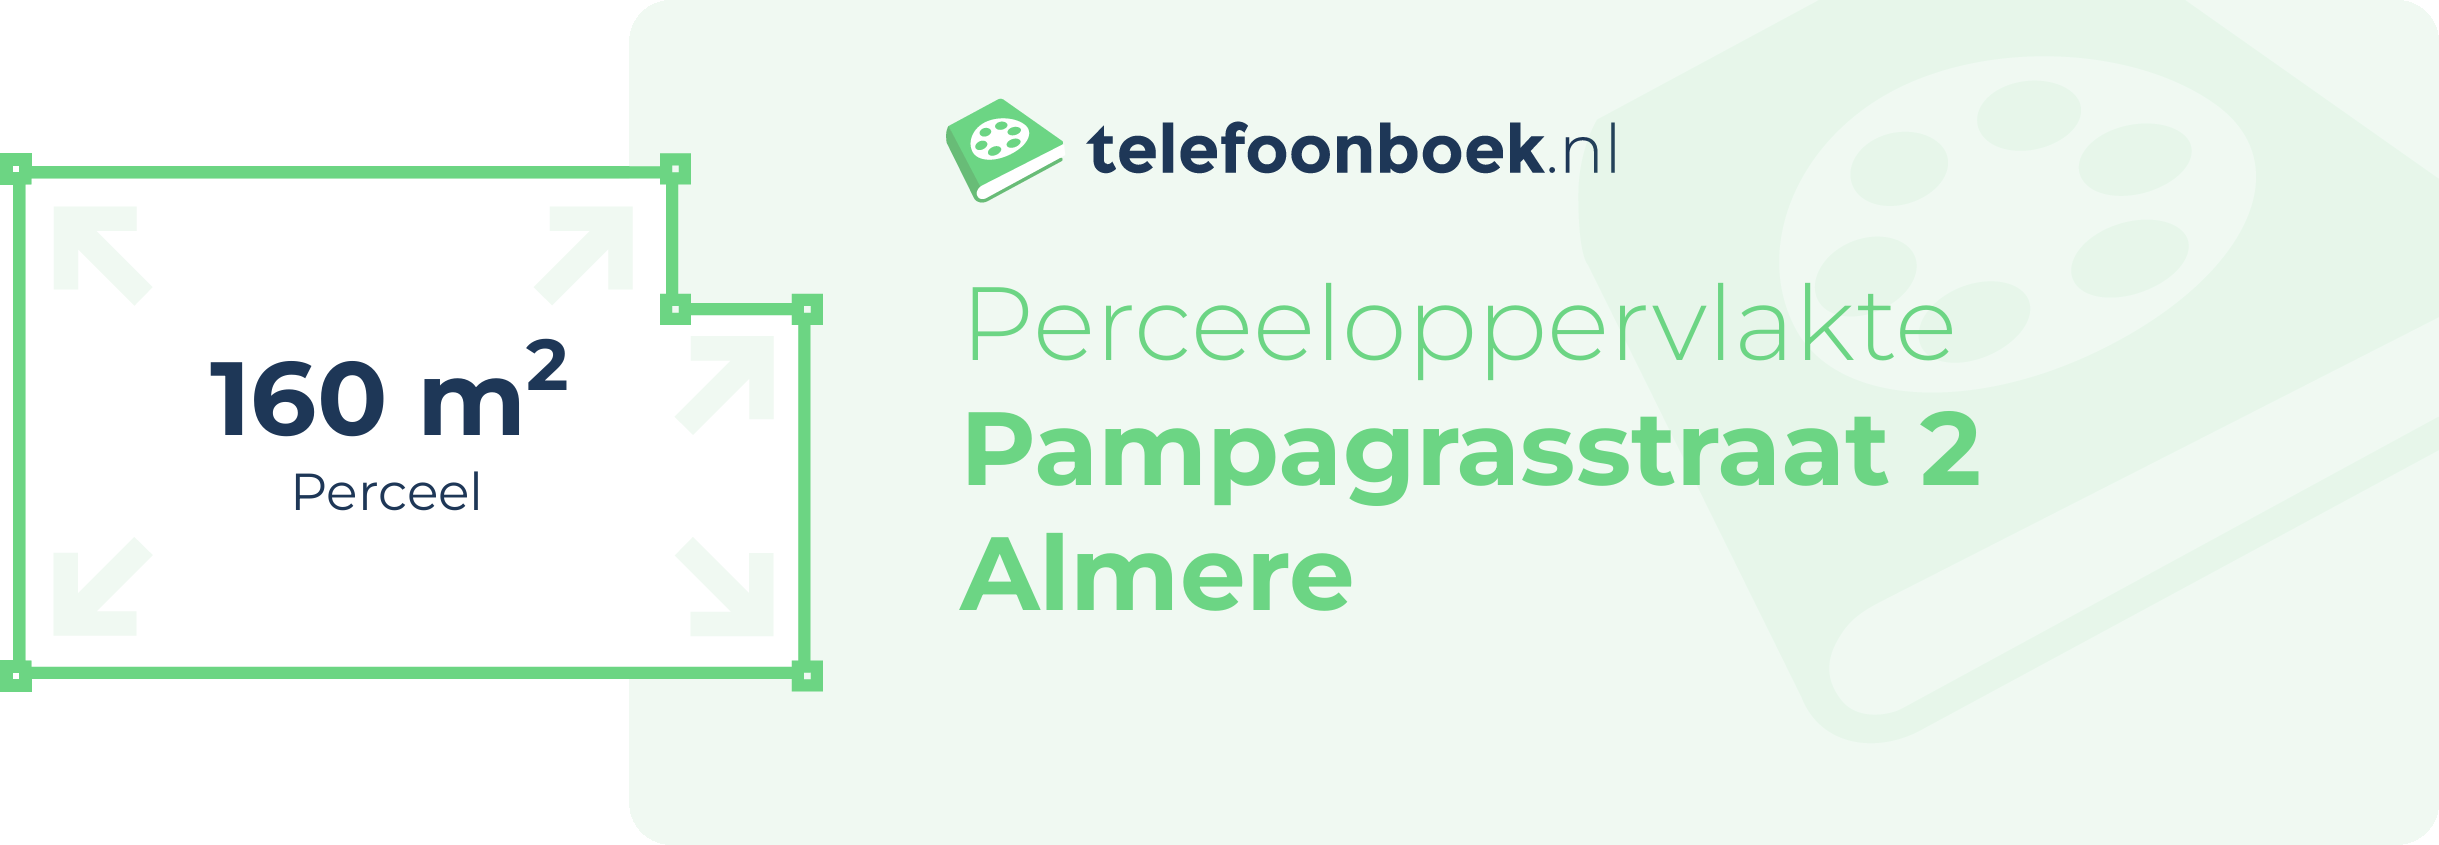 Perceeloppervlakte Pampagrasstraat 2 Almere